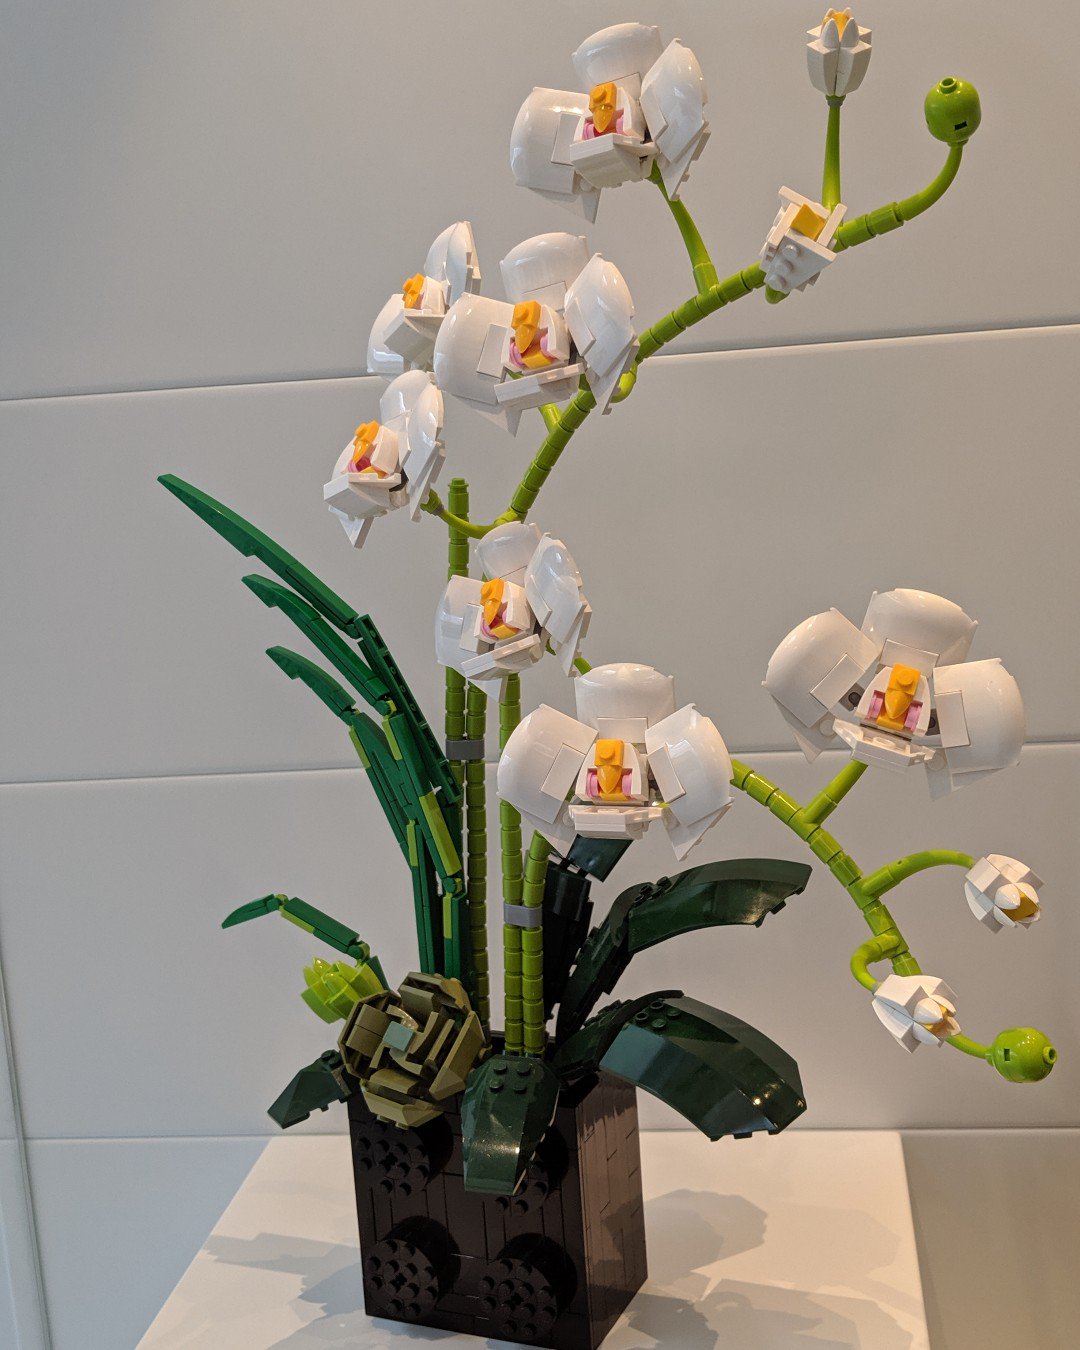 Joy Adare on X: A Lego Orchid Creation! I adore orchids - this makes me so  happy! #lego #legoland #denmark #billund #legohouse #orchid #orchids  #legoflowers #flowers #whiteorchids #creativity #creative #play  #legostagram #legofan #